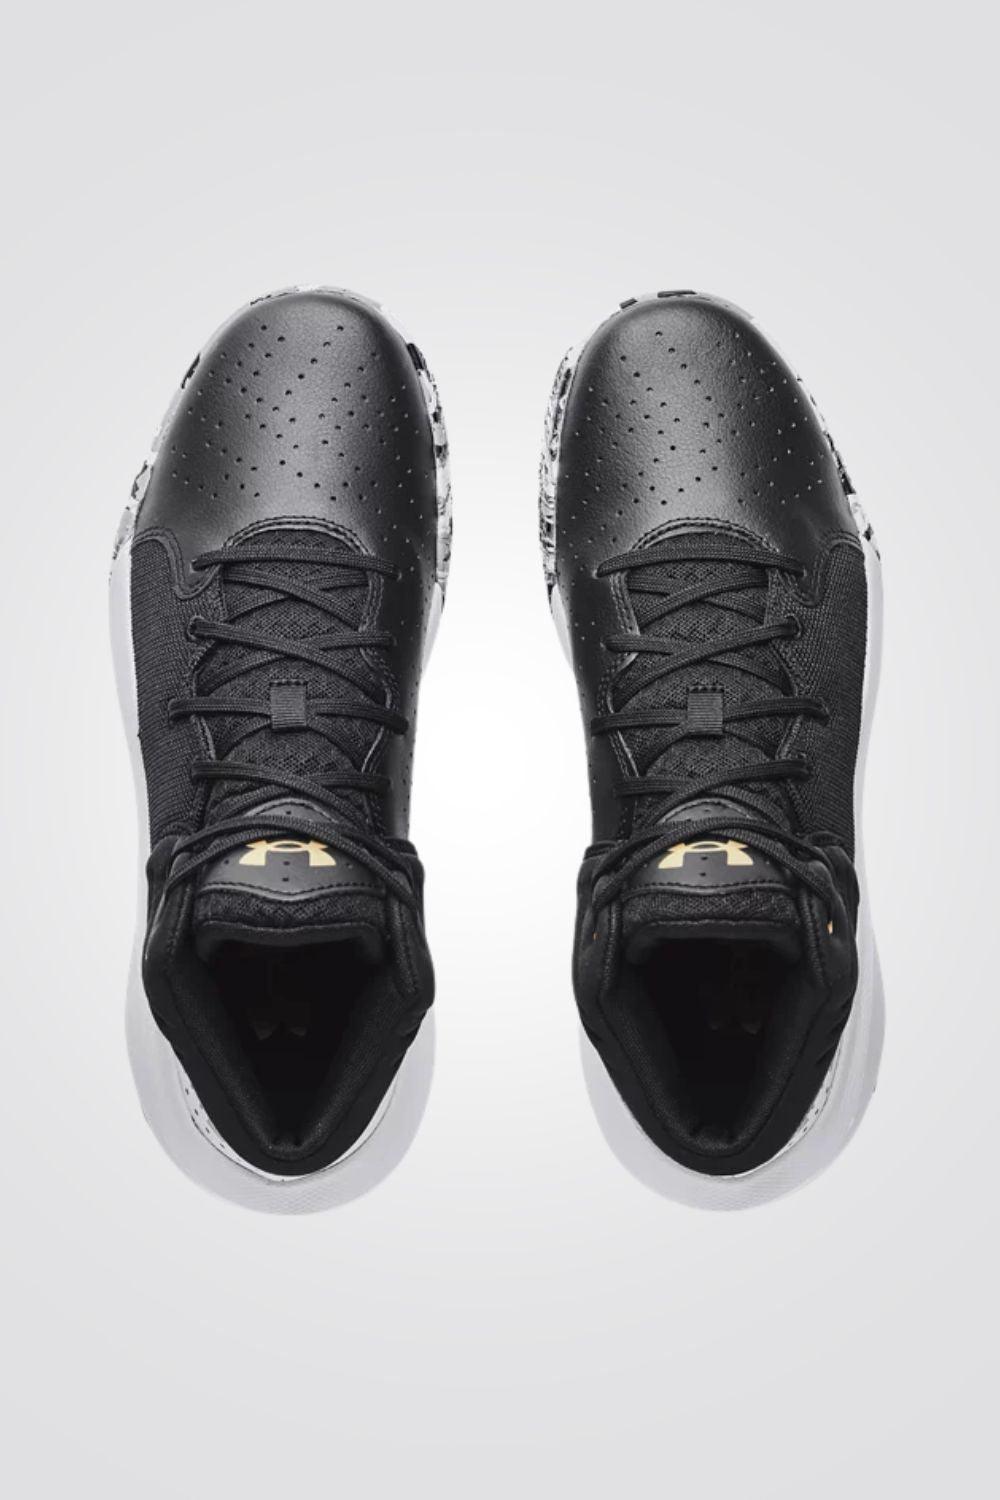 UNDER ARMOUR - נעלי ספורט JET '21 BASKETBALL בצבע שחור ולבן - MASHBIR//365